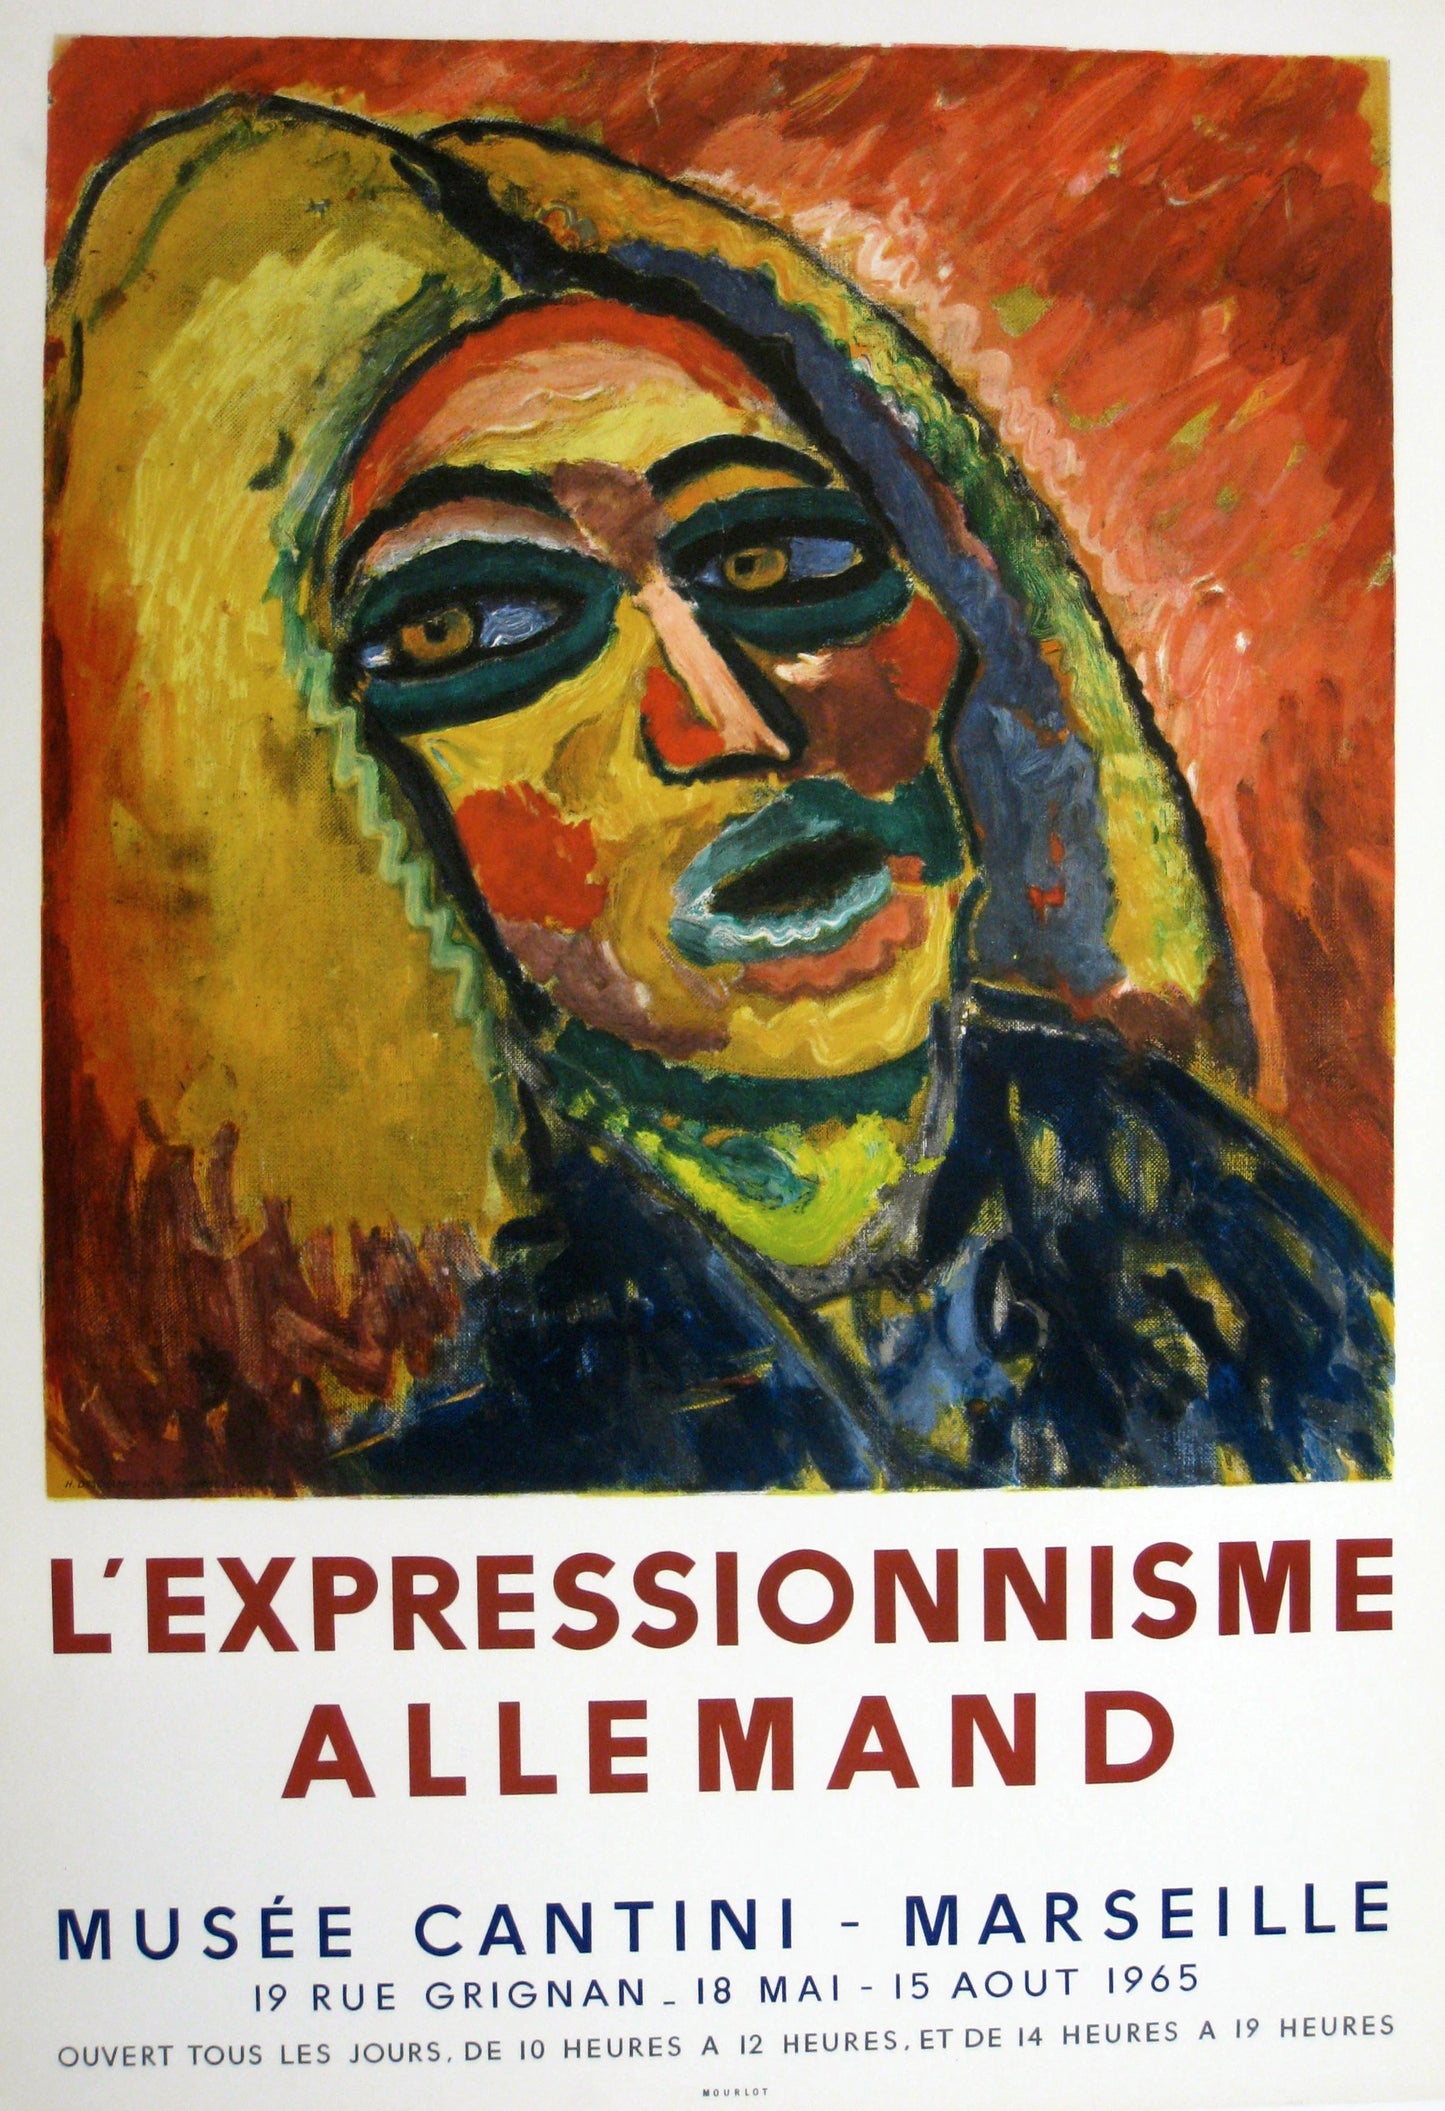 L'Expressionisme Allemand (after) Ernst-Ludwig Kirchner, 1965 - Mourlot Editions - Fine_Art - Poster - Lithograph - Wall Art - Vintage - Prints - Original